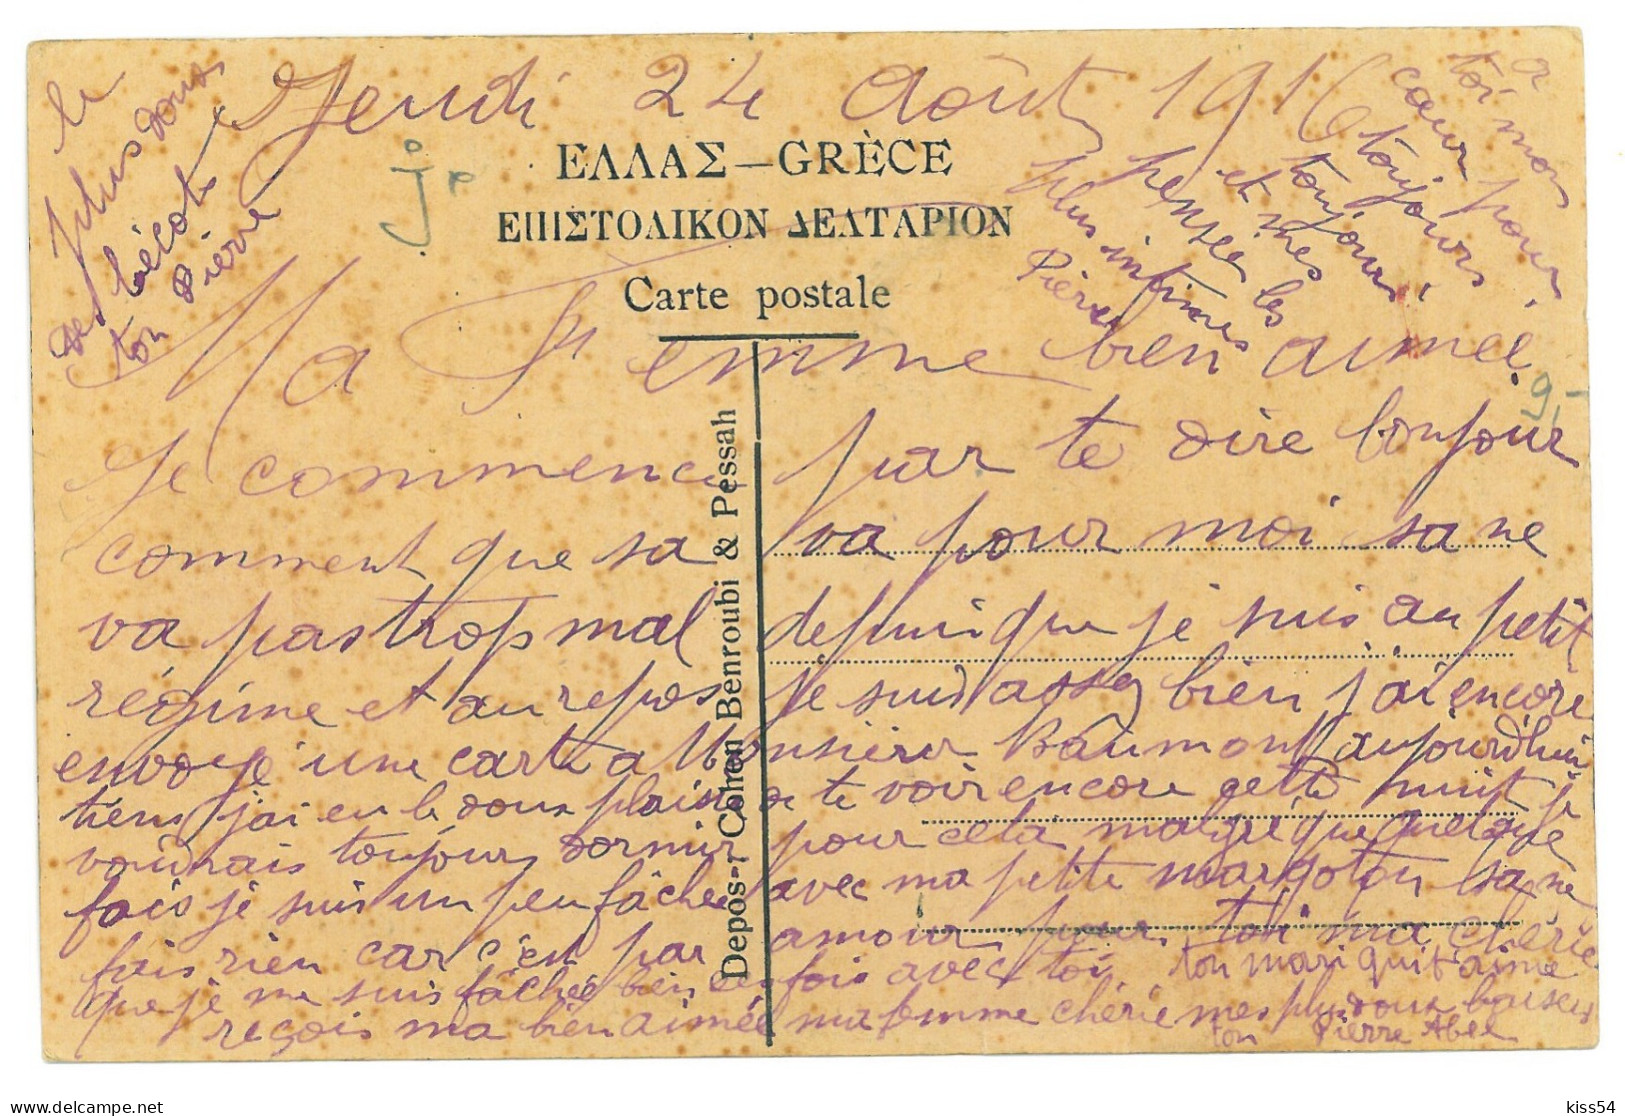 GR 3 - 20544 SALONIQUE, Israelite Women, Greece - Old Postcard - Used - 1916 - Grecia